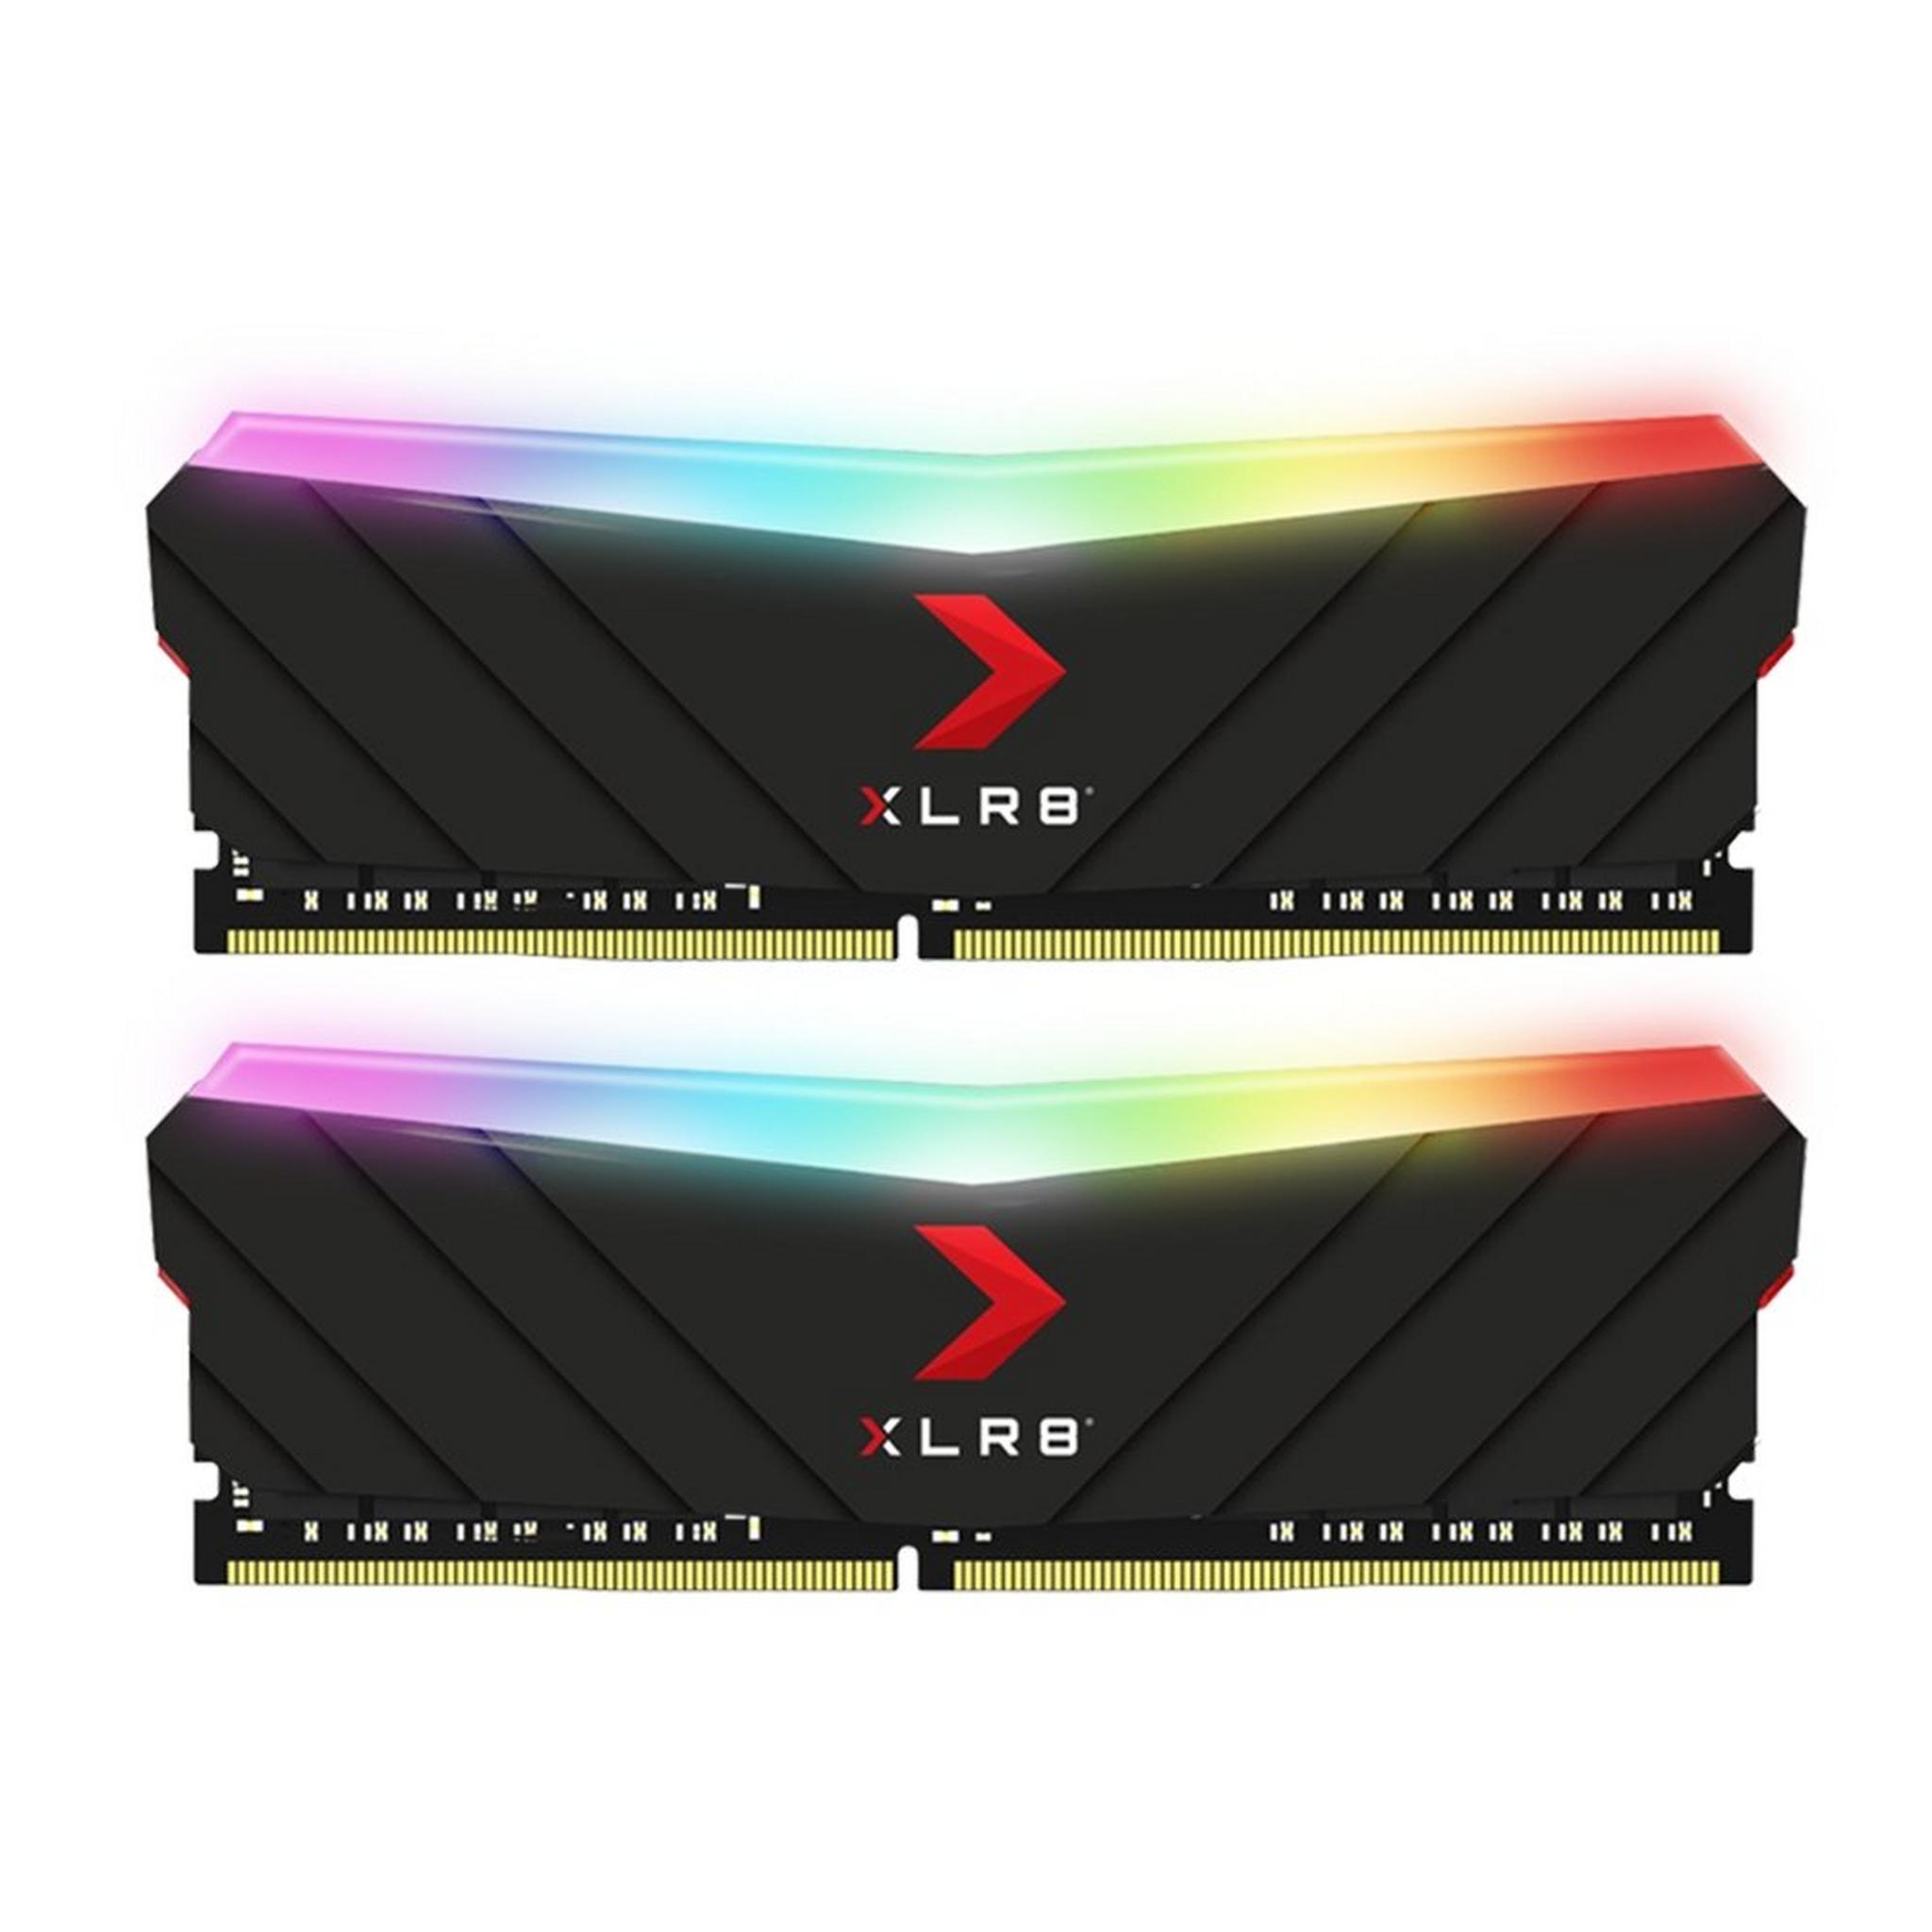 PNY XLR8 Epic X RGB-DDR4 3600mHz 2*8GB Gaming Desktop Memory - Black